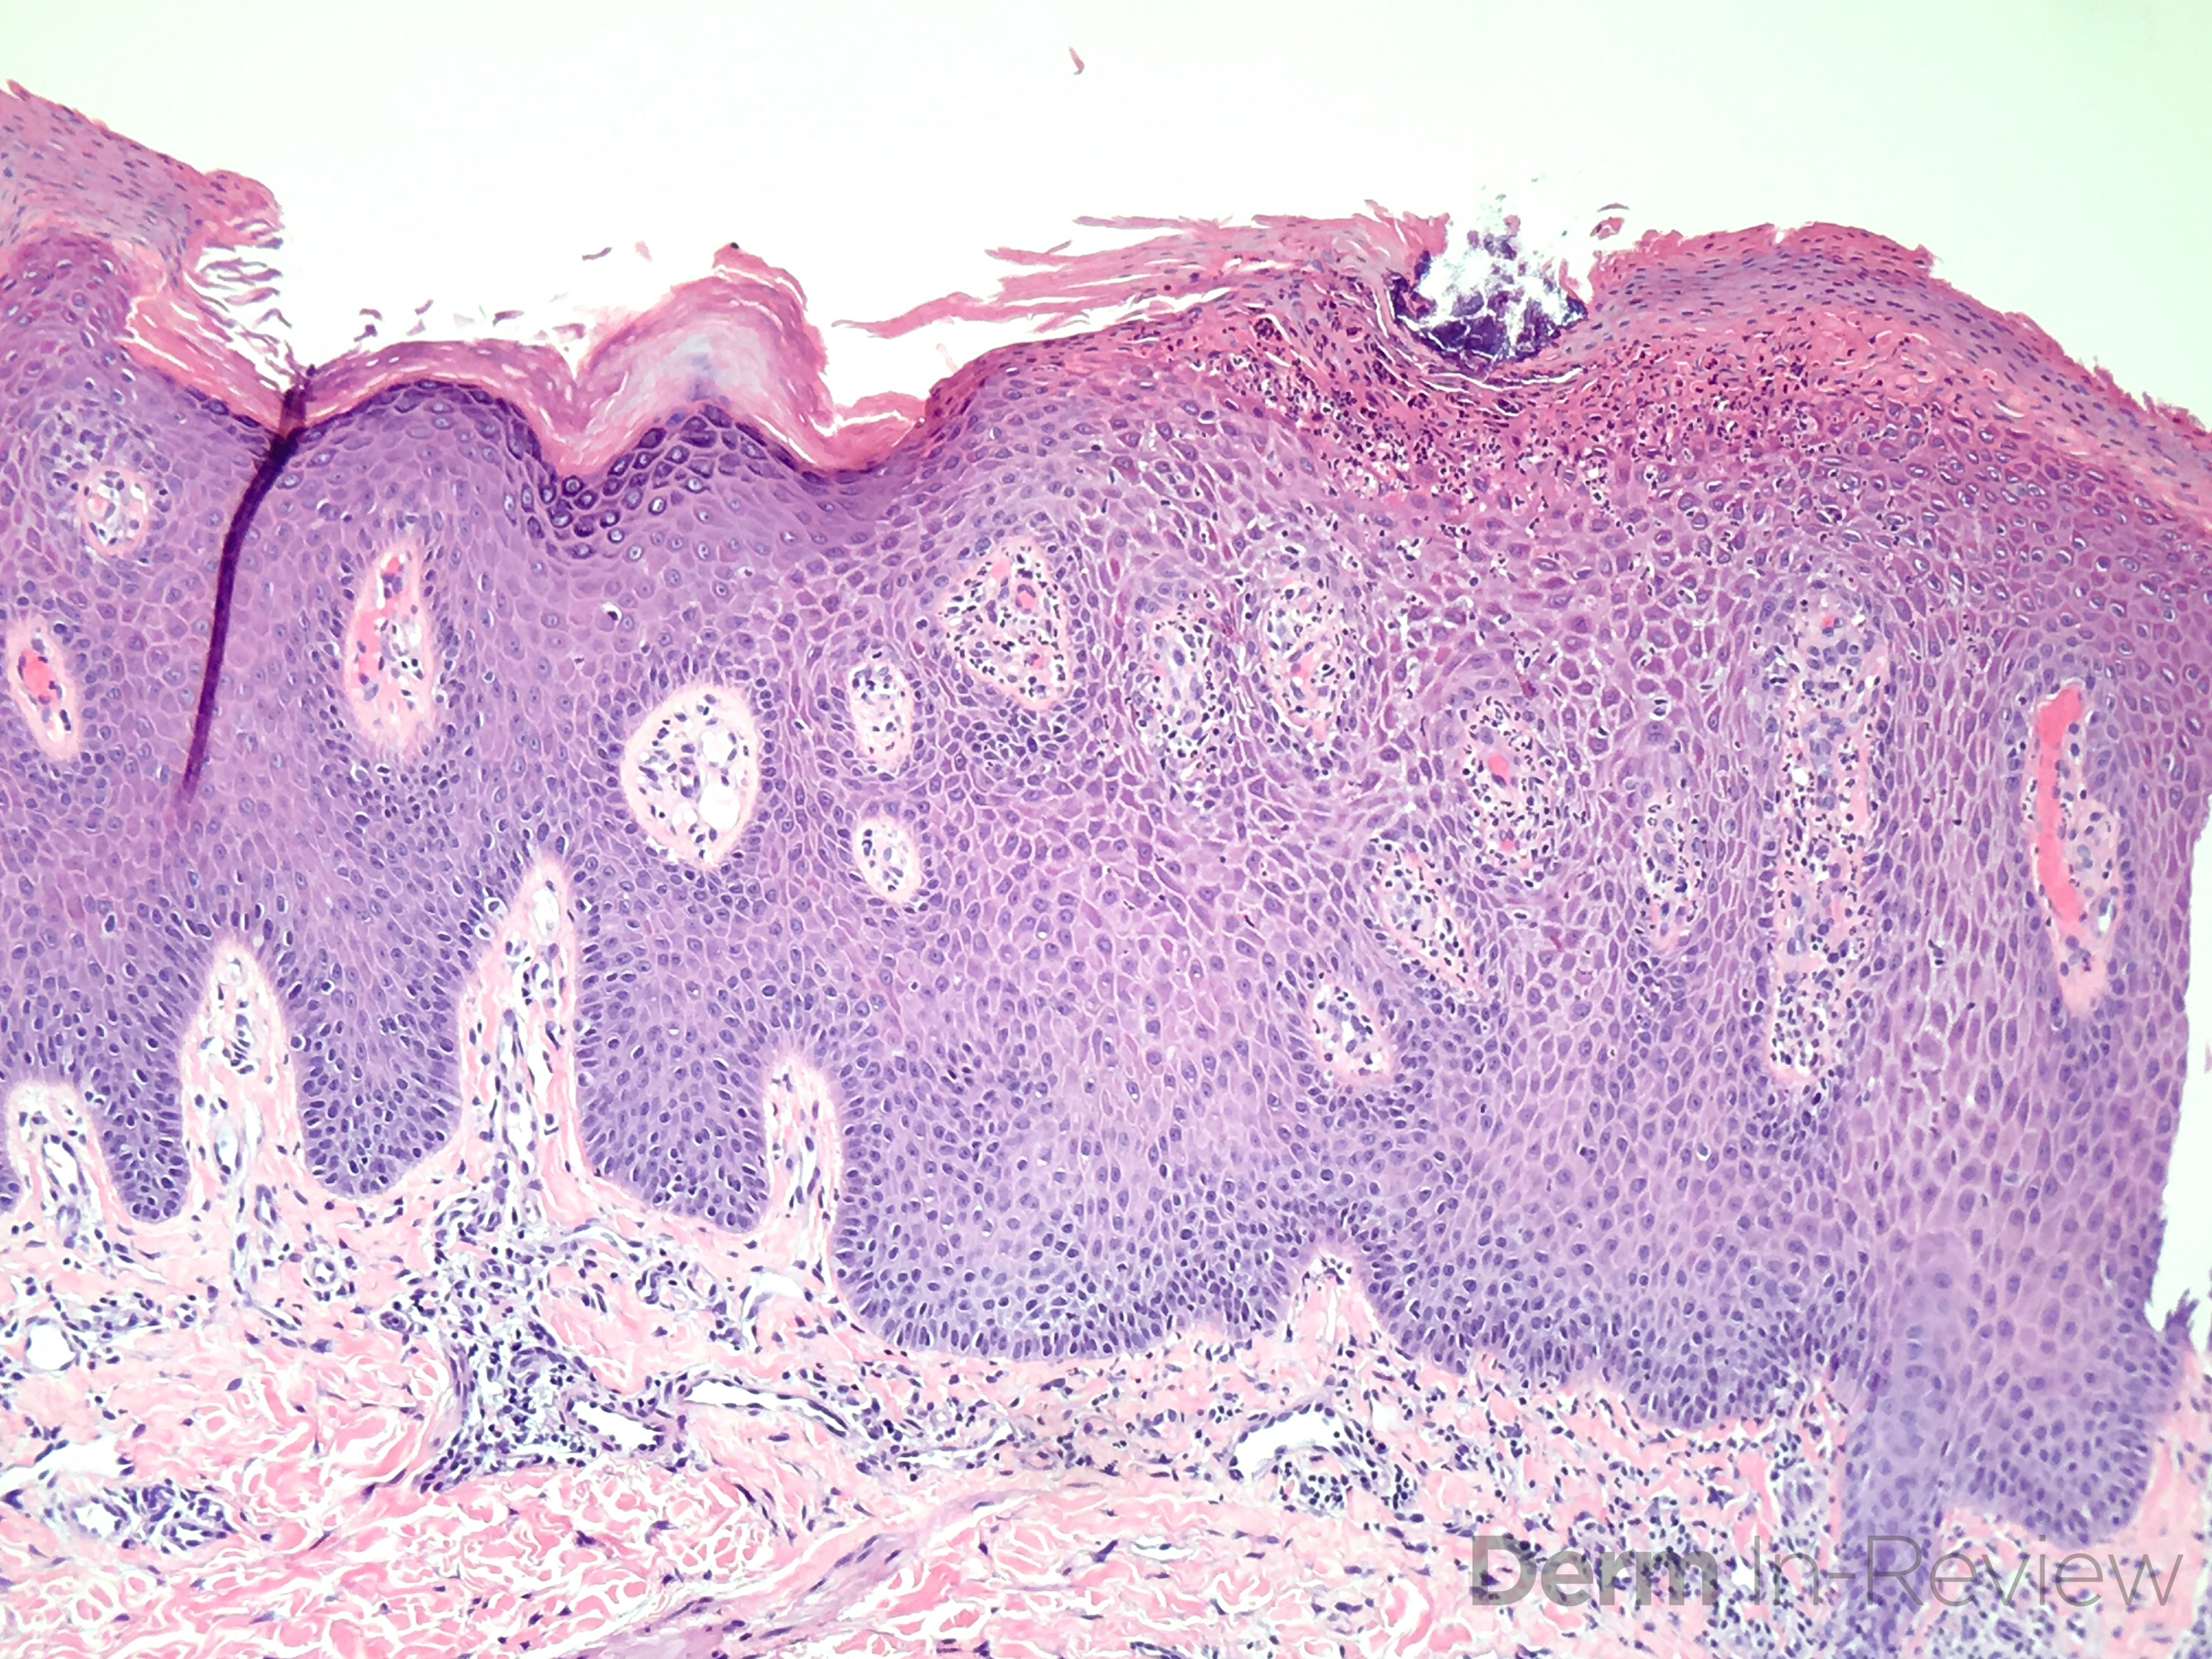 Inflammatory linear verrucous epidermal nevus